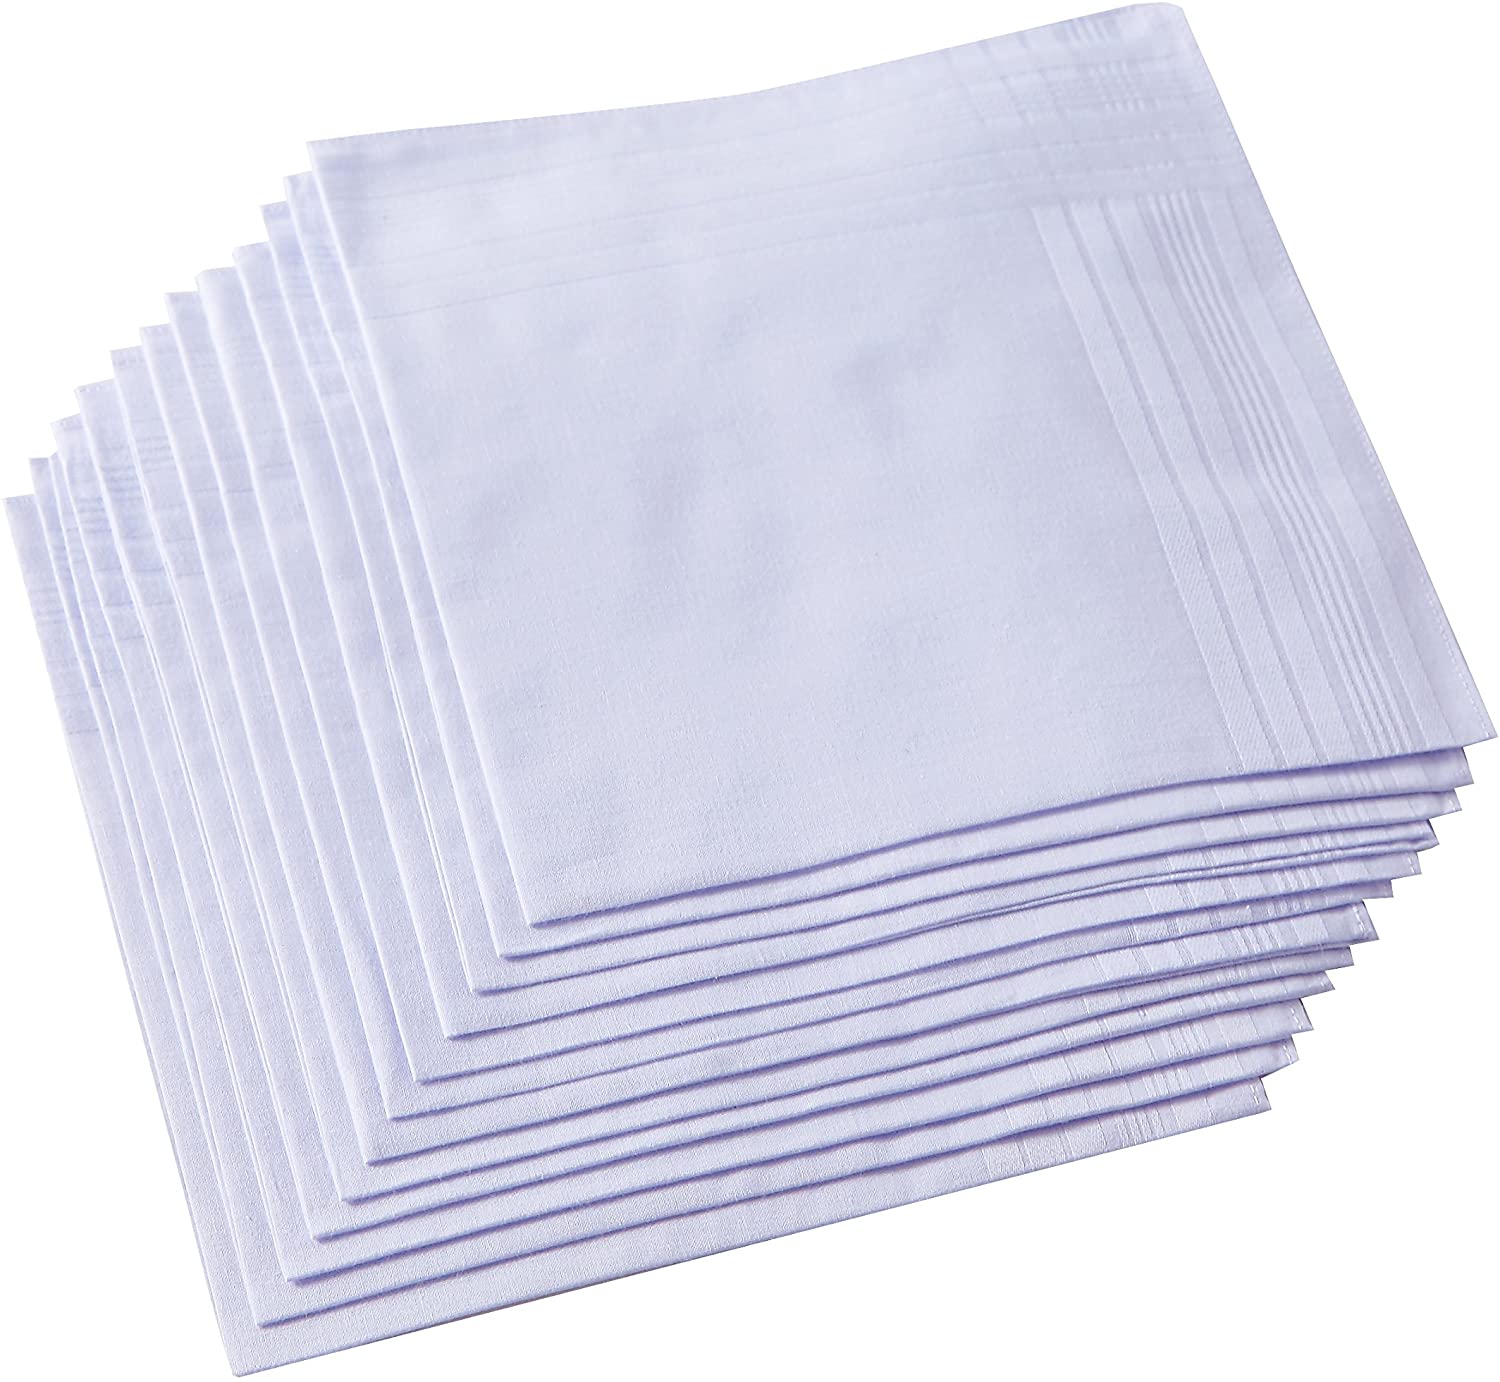 Amazon.com: pañuelo de 100% algodón blanco puro para hombre: kitchen & dining